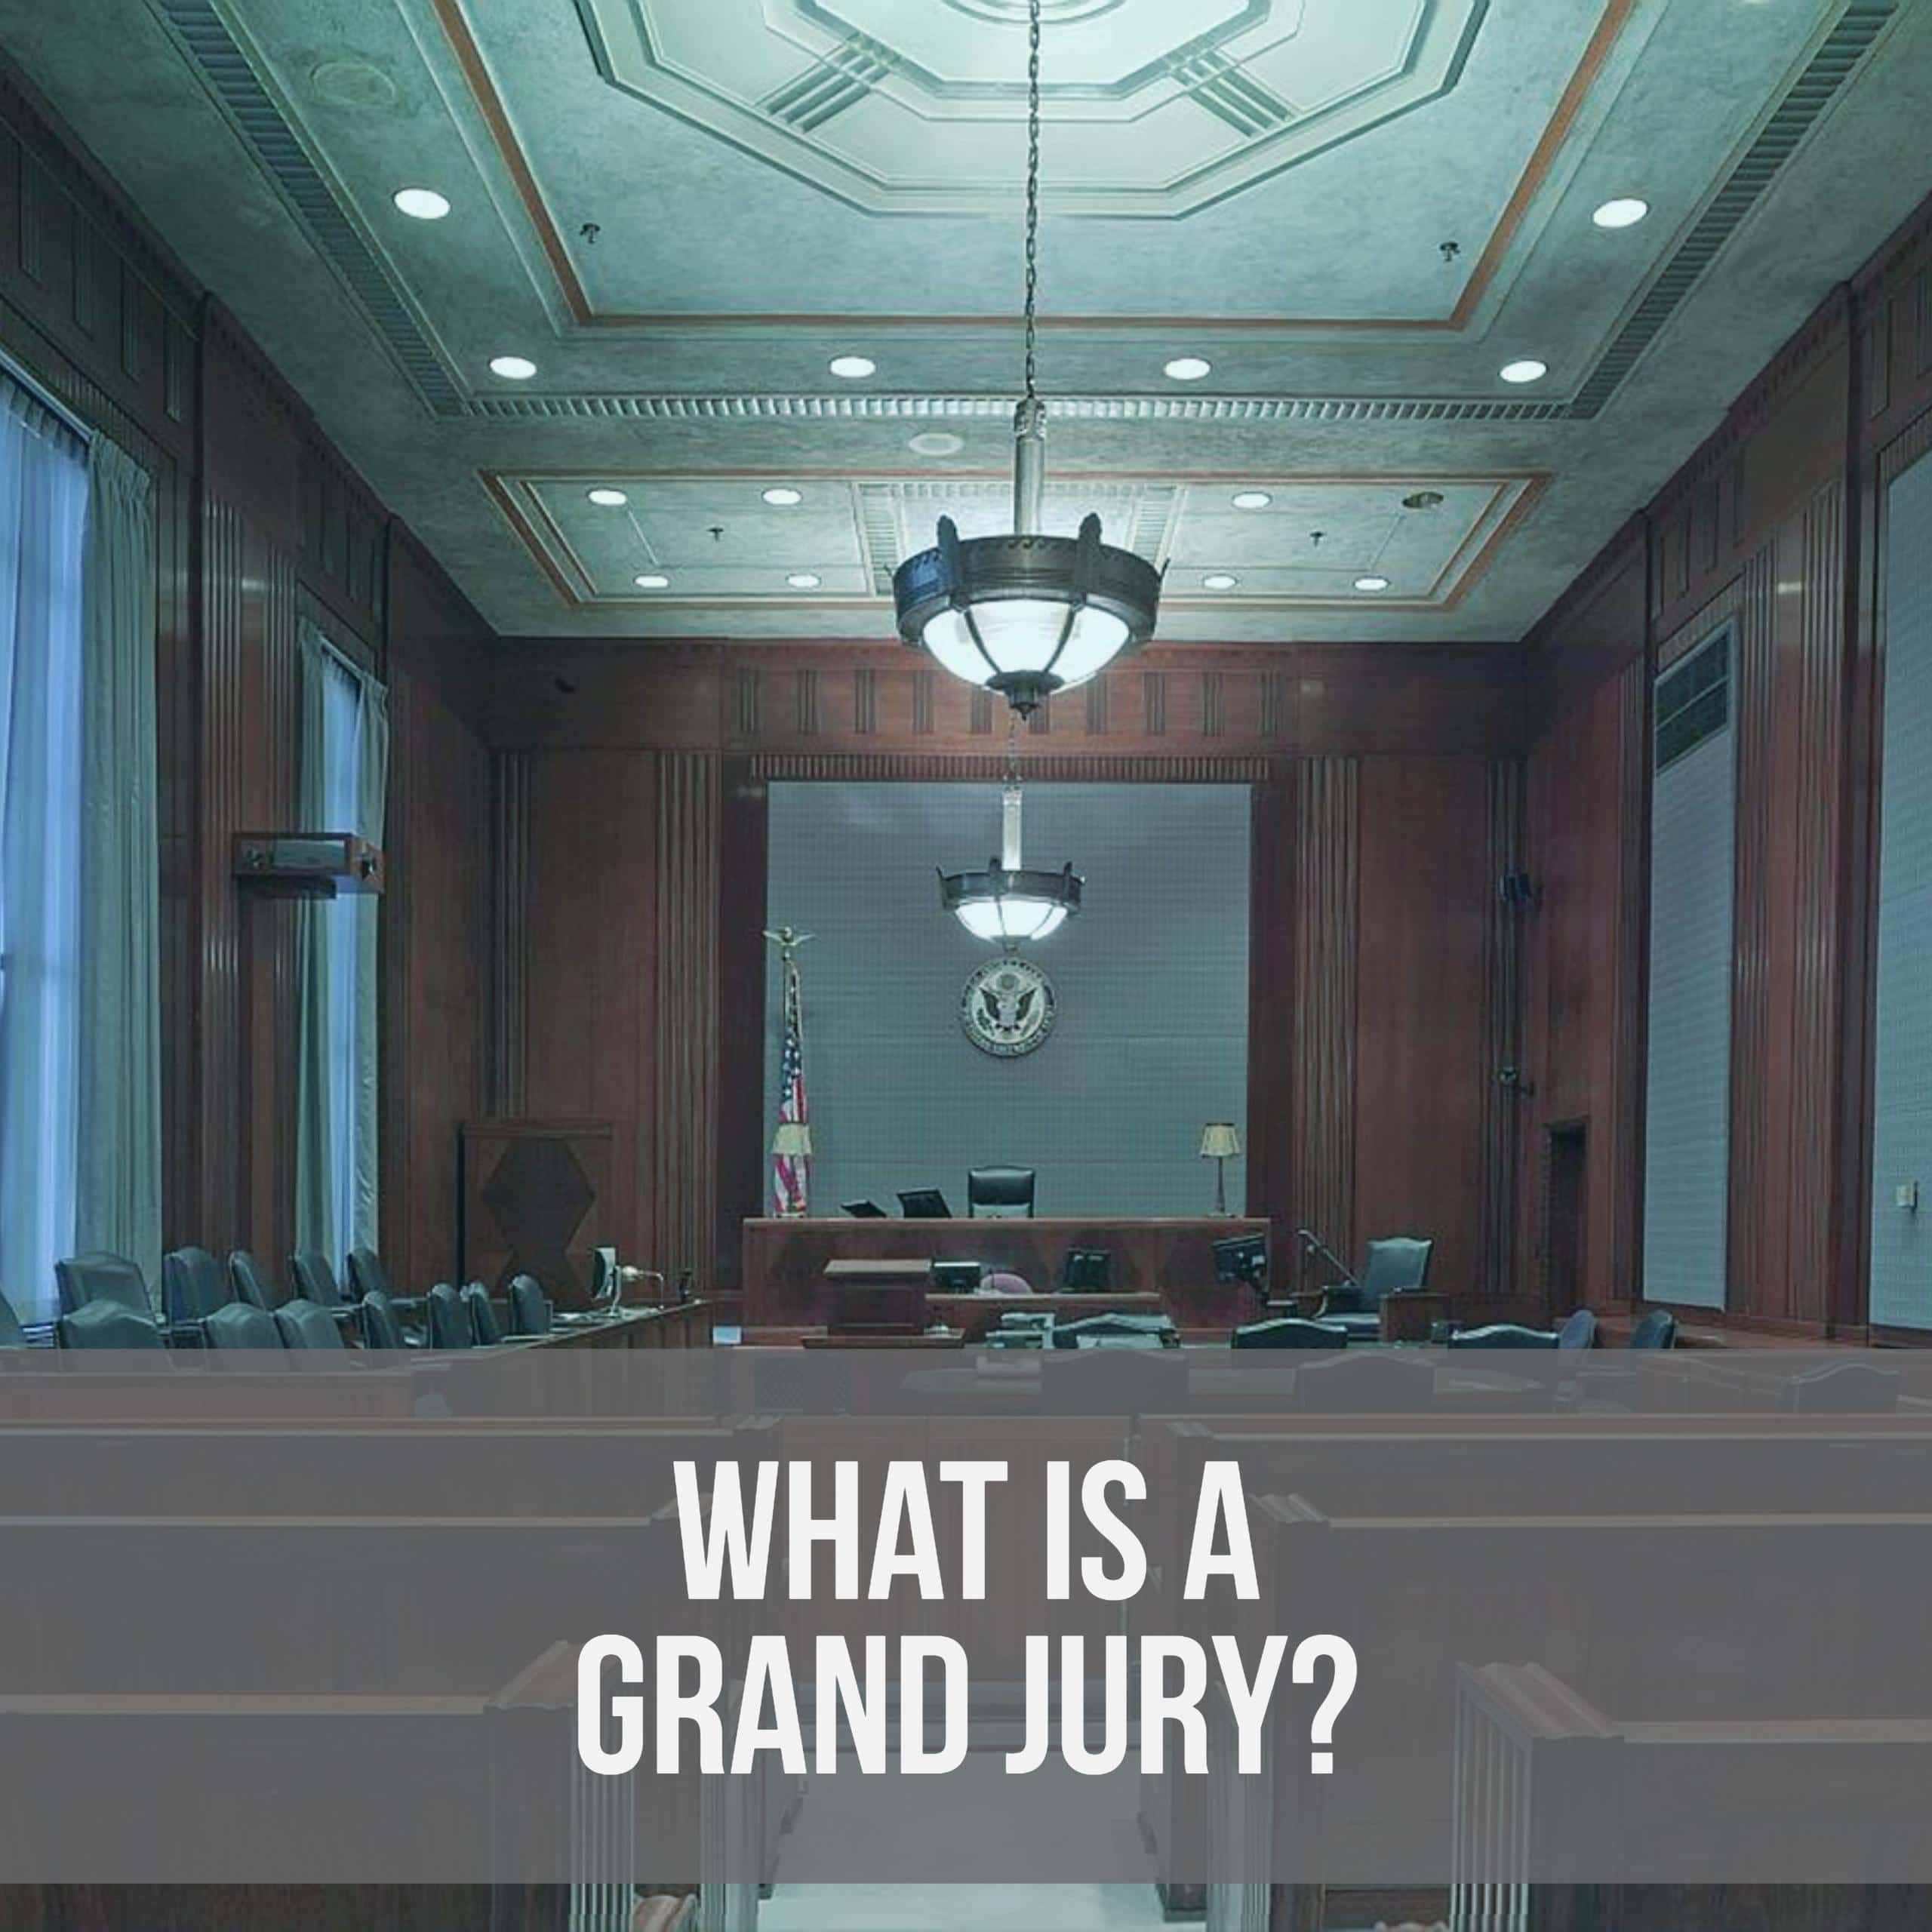 Texas Jury Reform Would Limit Prosecutors in Grand Jury Proceedings